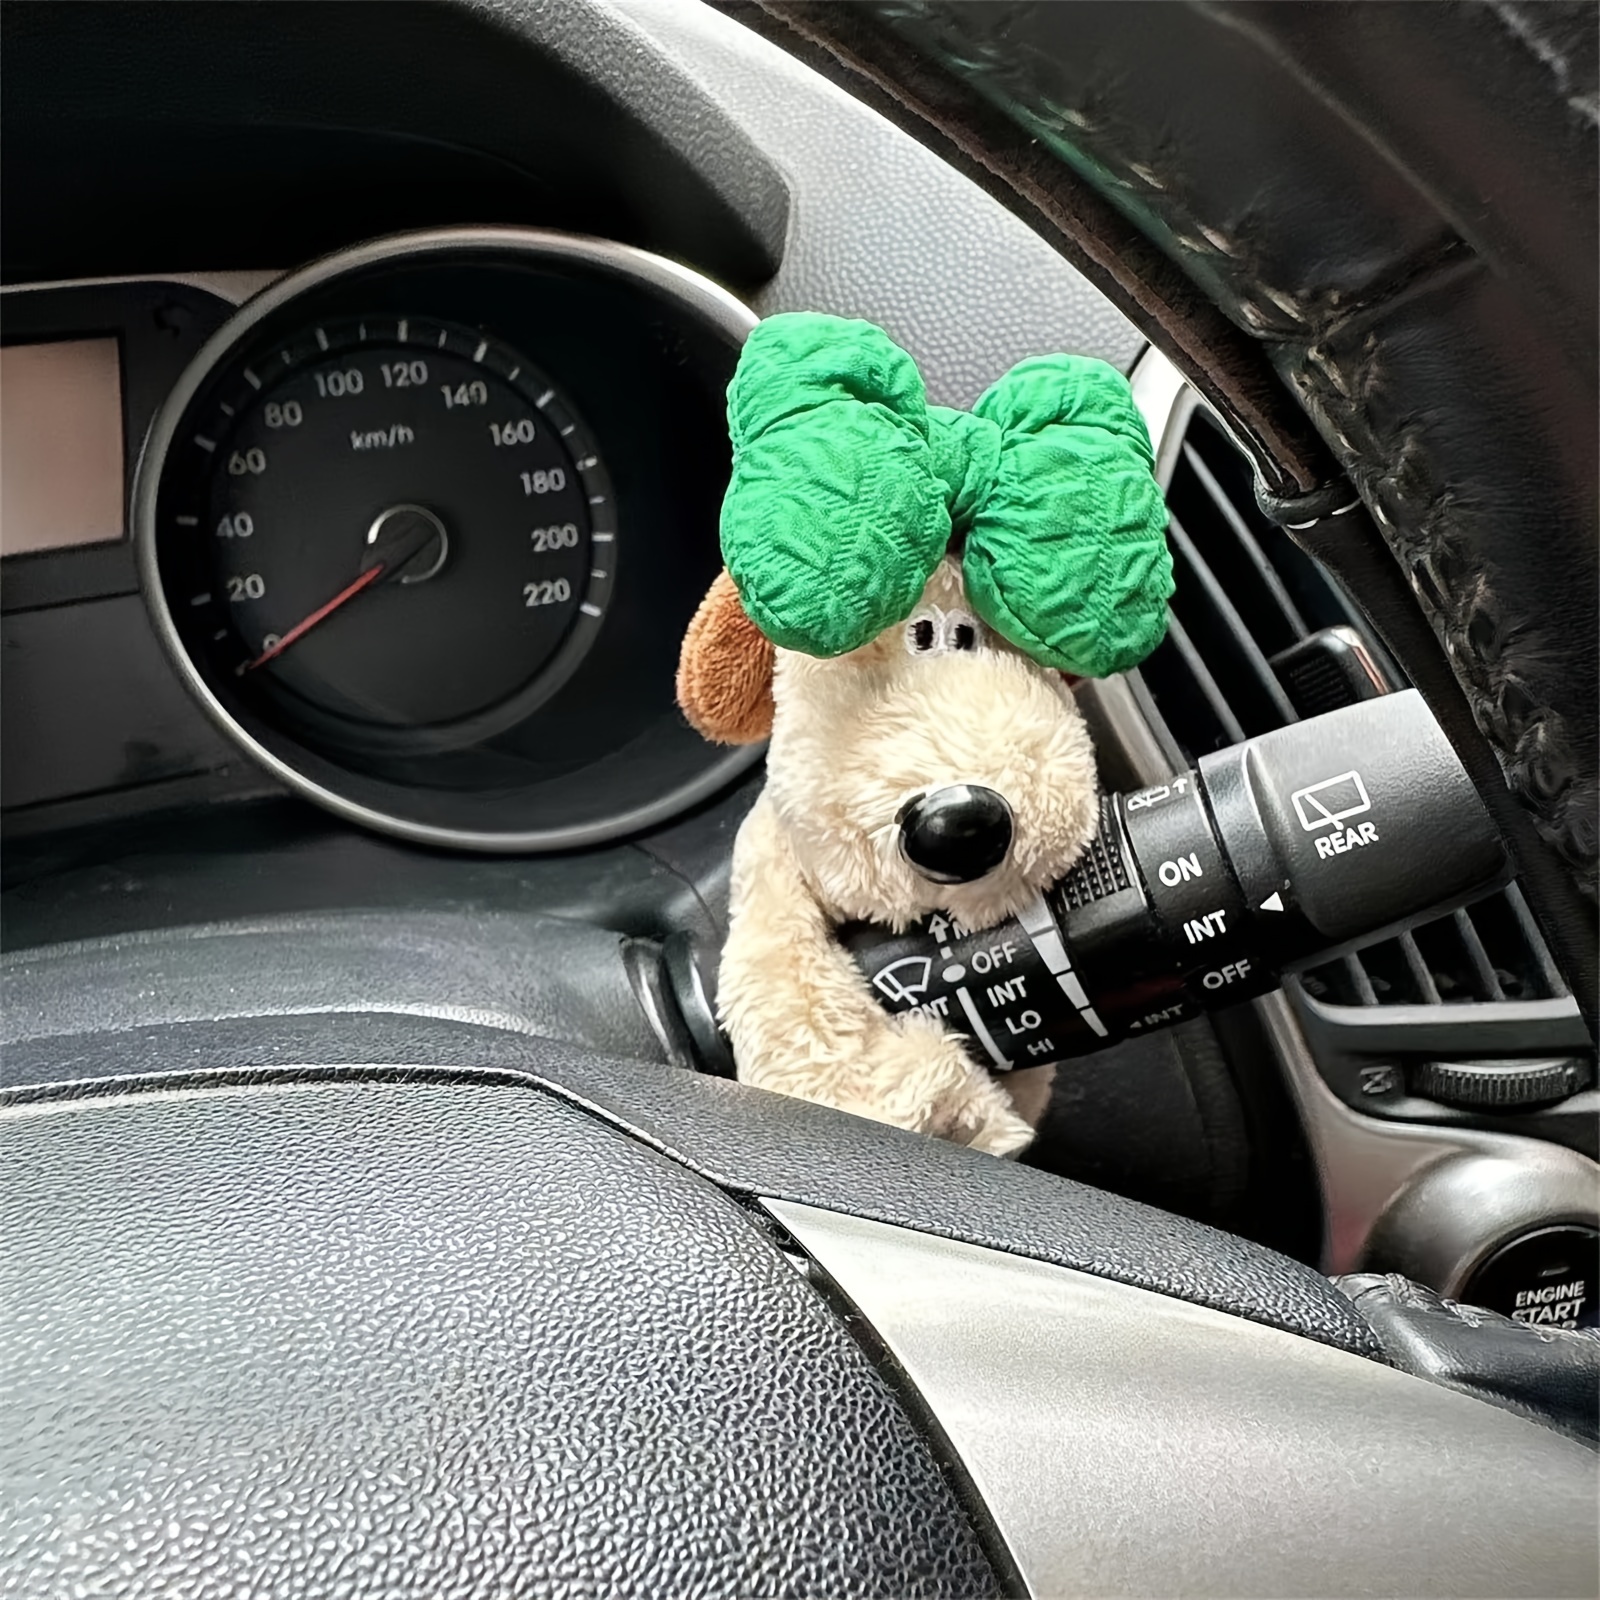 Car Decoration Dog,2023 Car Plush Doll Decorations For Wiper Shift